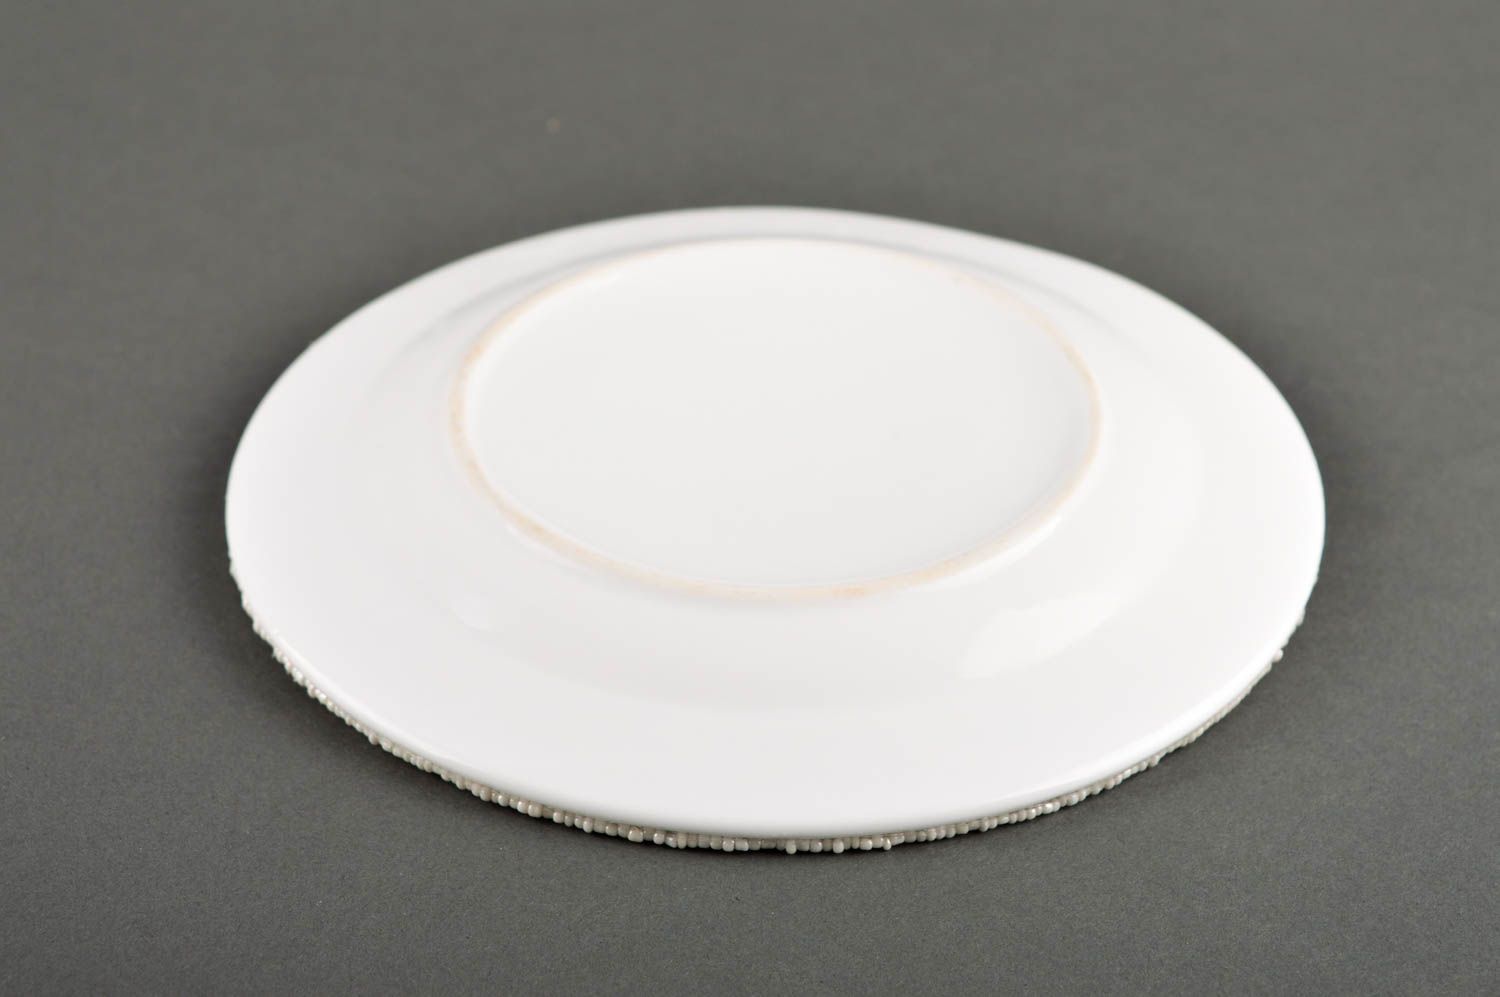 Handmade ceramic plate decorative ceramic plate unusual gift decorative use only photo 5